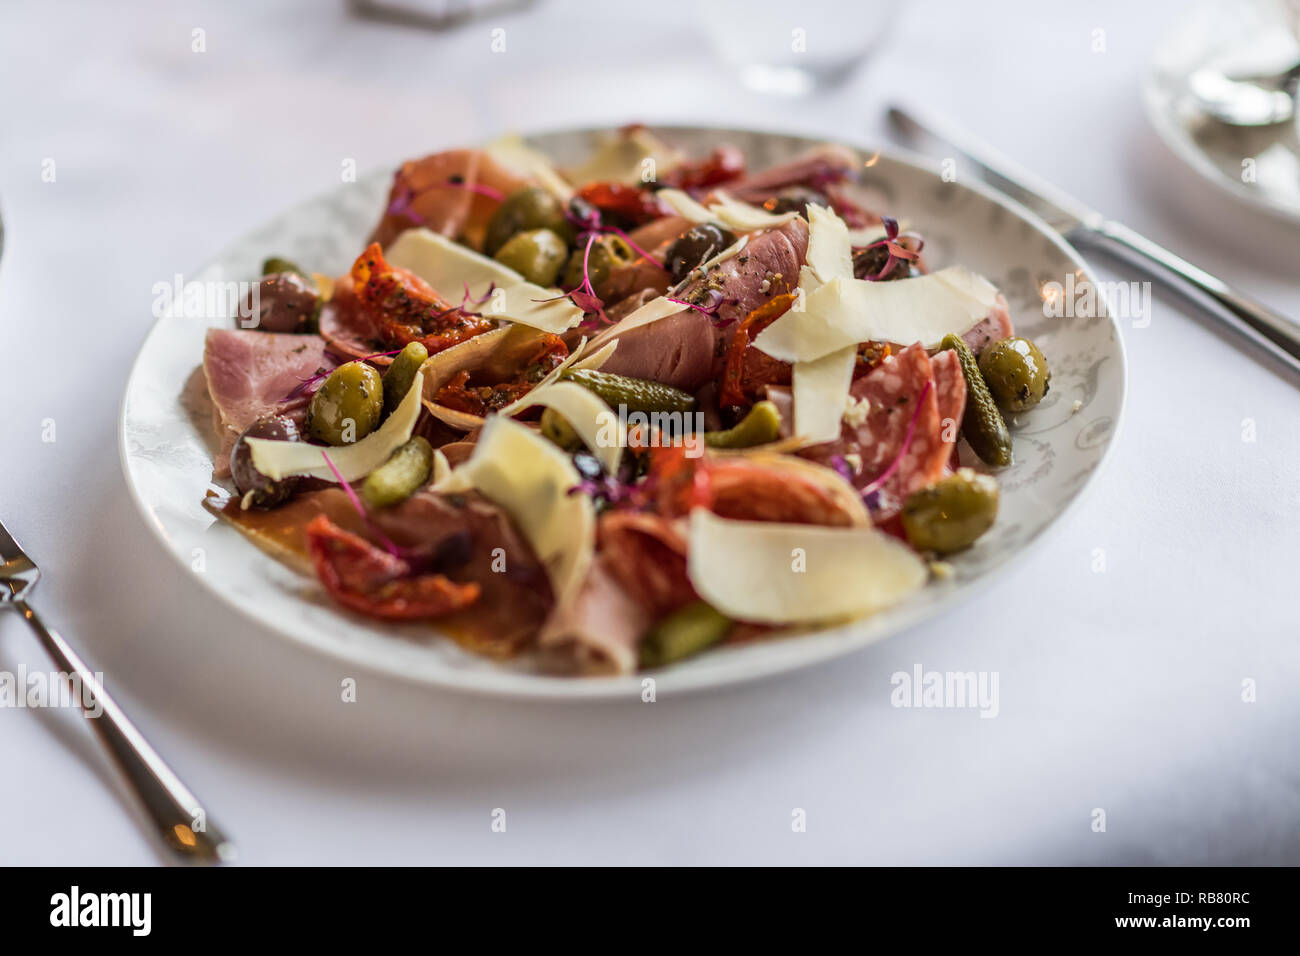 Spanish ham, sun dried tomato, olive and cheese sald Stock Photo